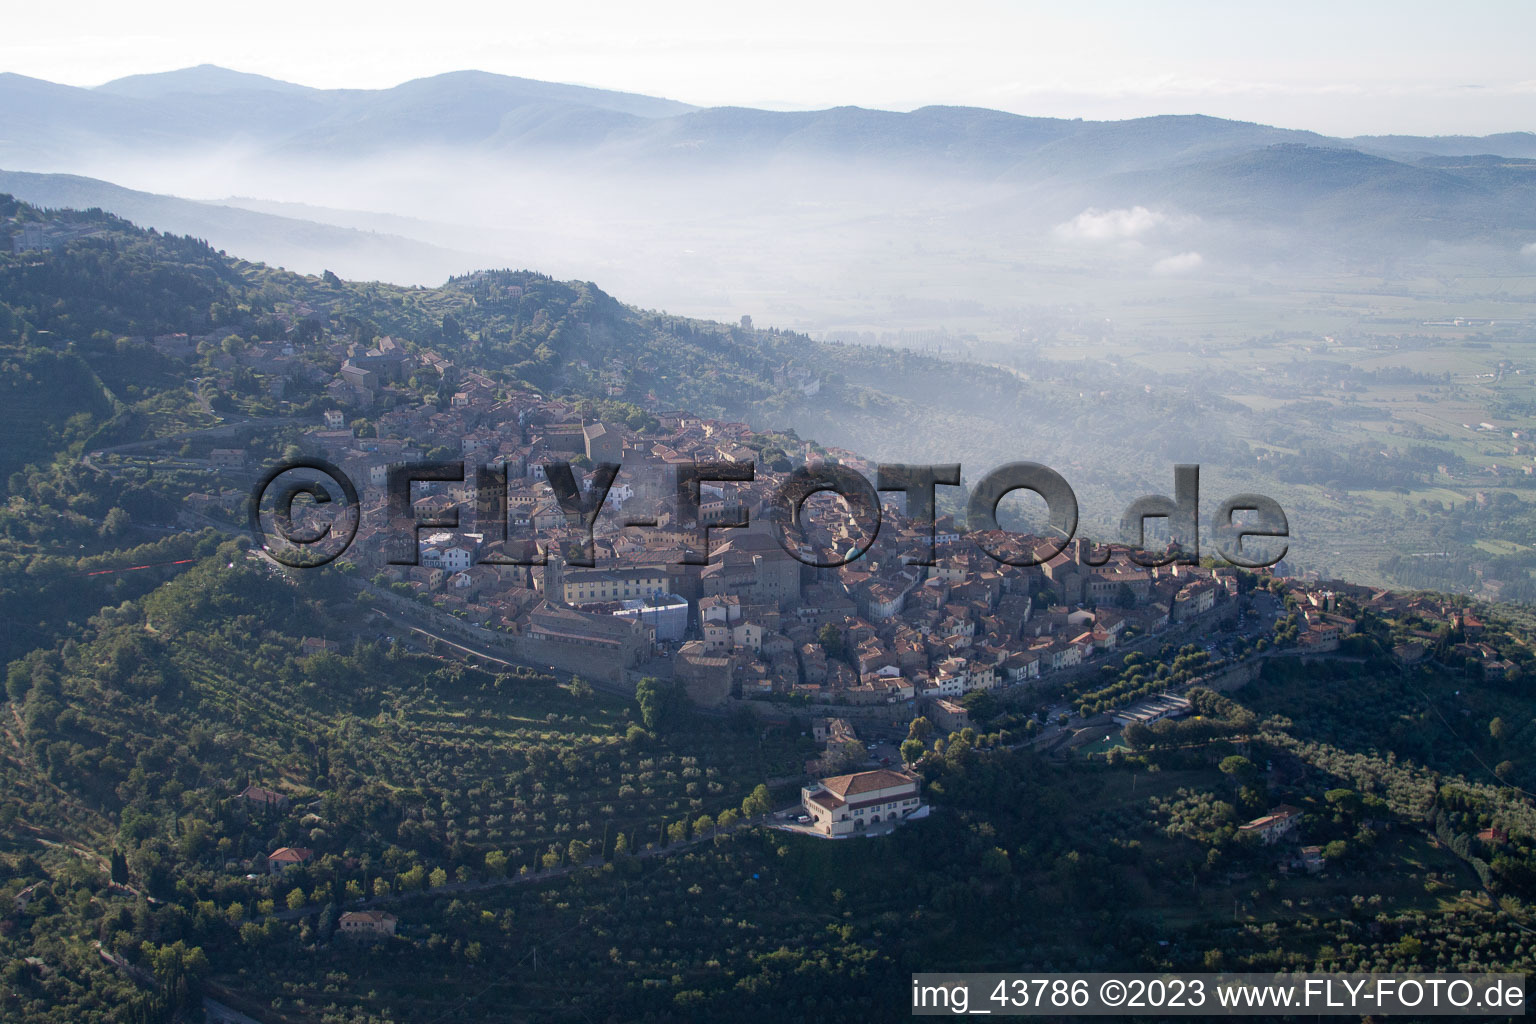 Luftbild von Cortona im Bundesland Toscana, Italien